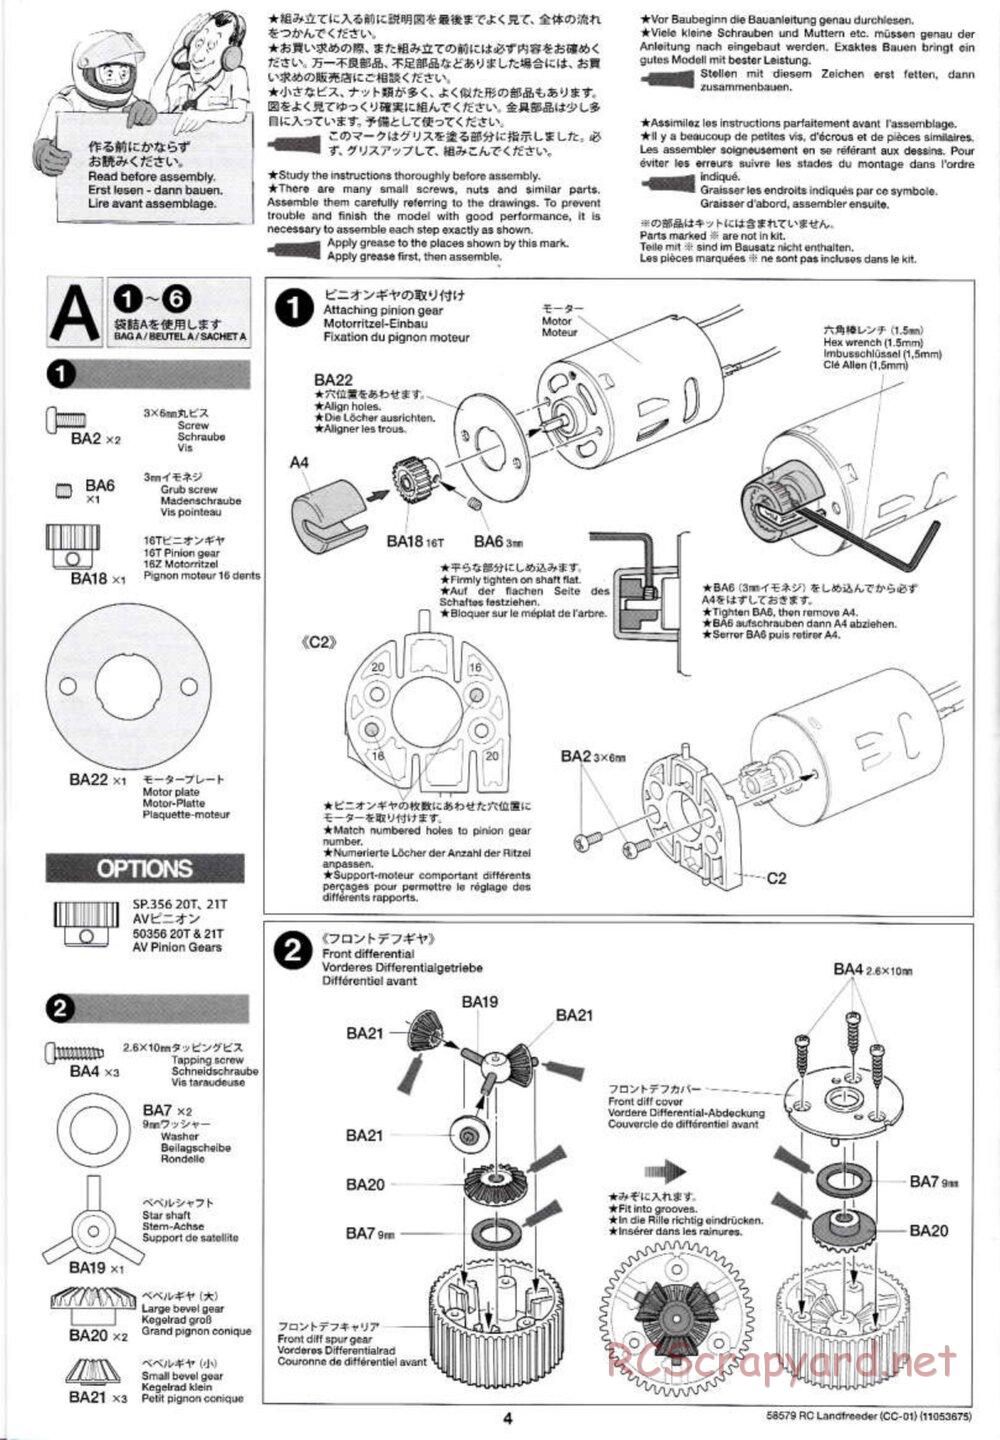 Tamiya - LandFreeder - CC-01 Chassis - Manual - Page 4